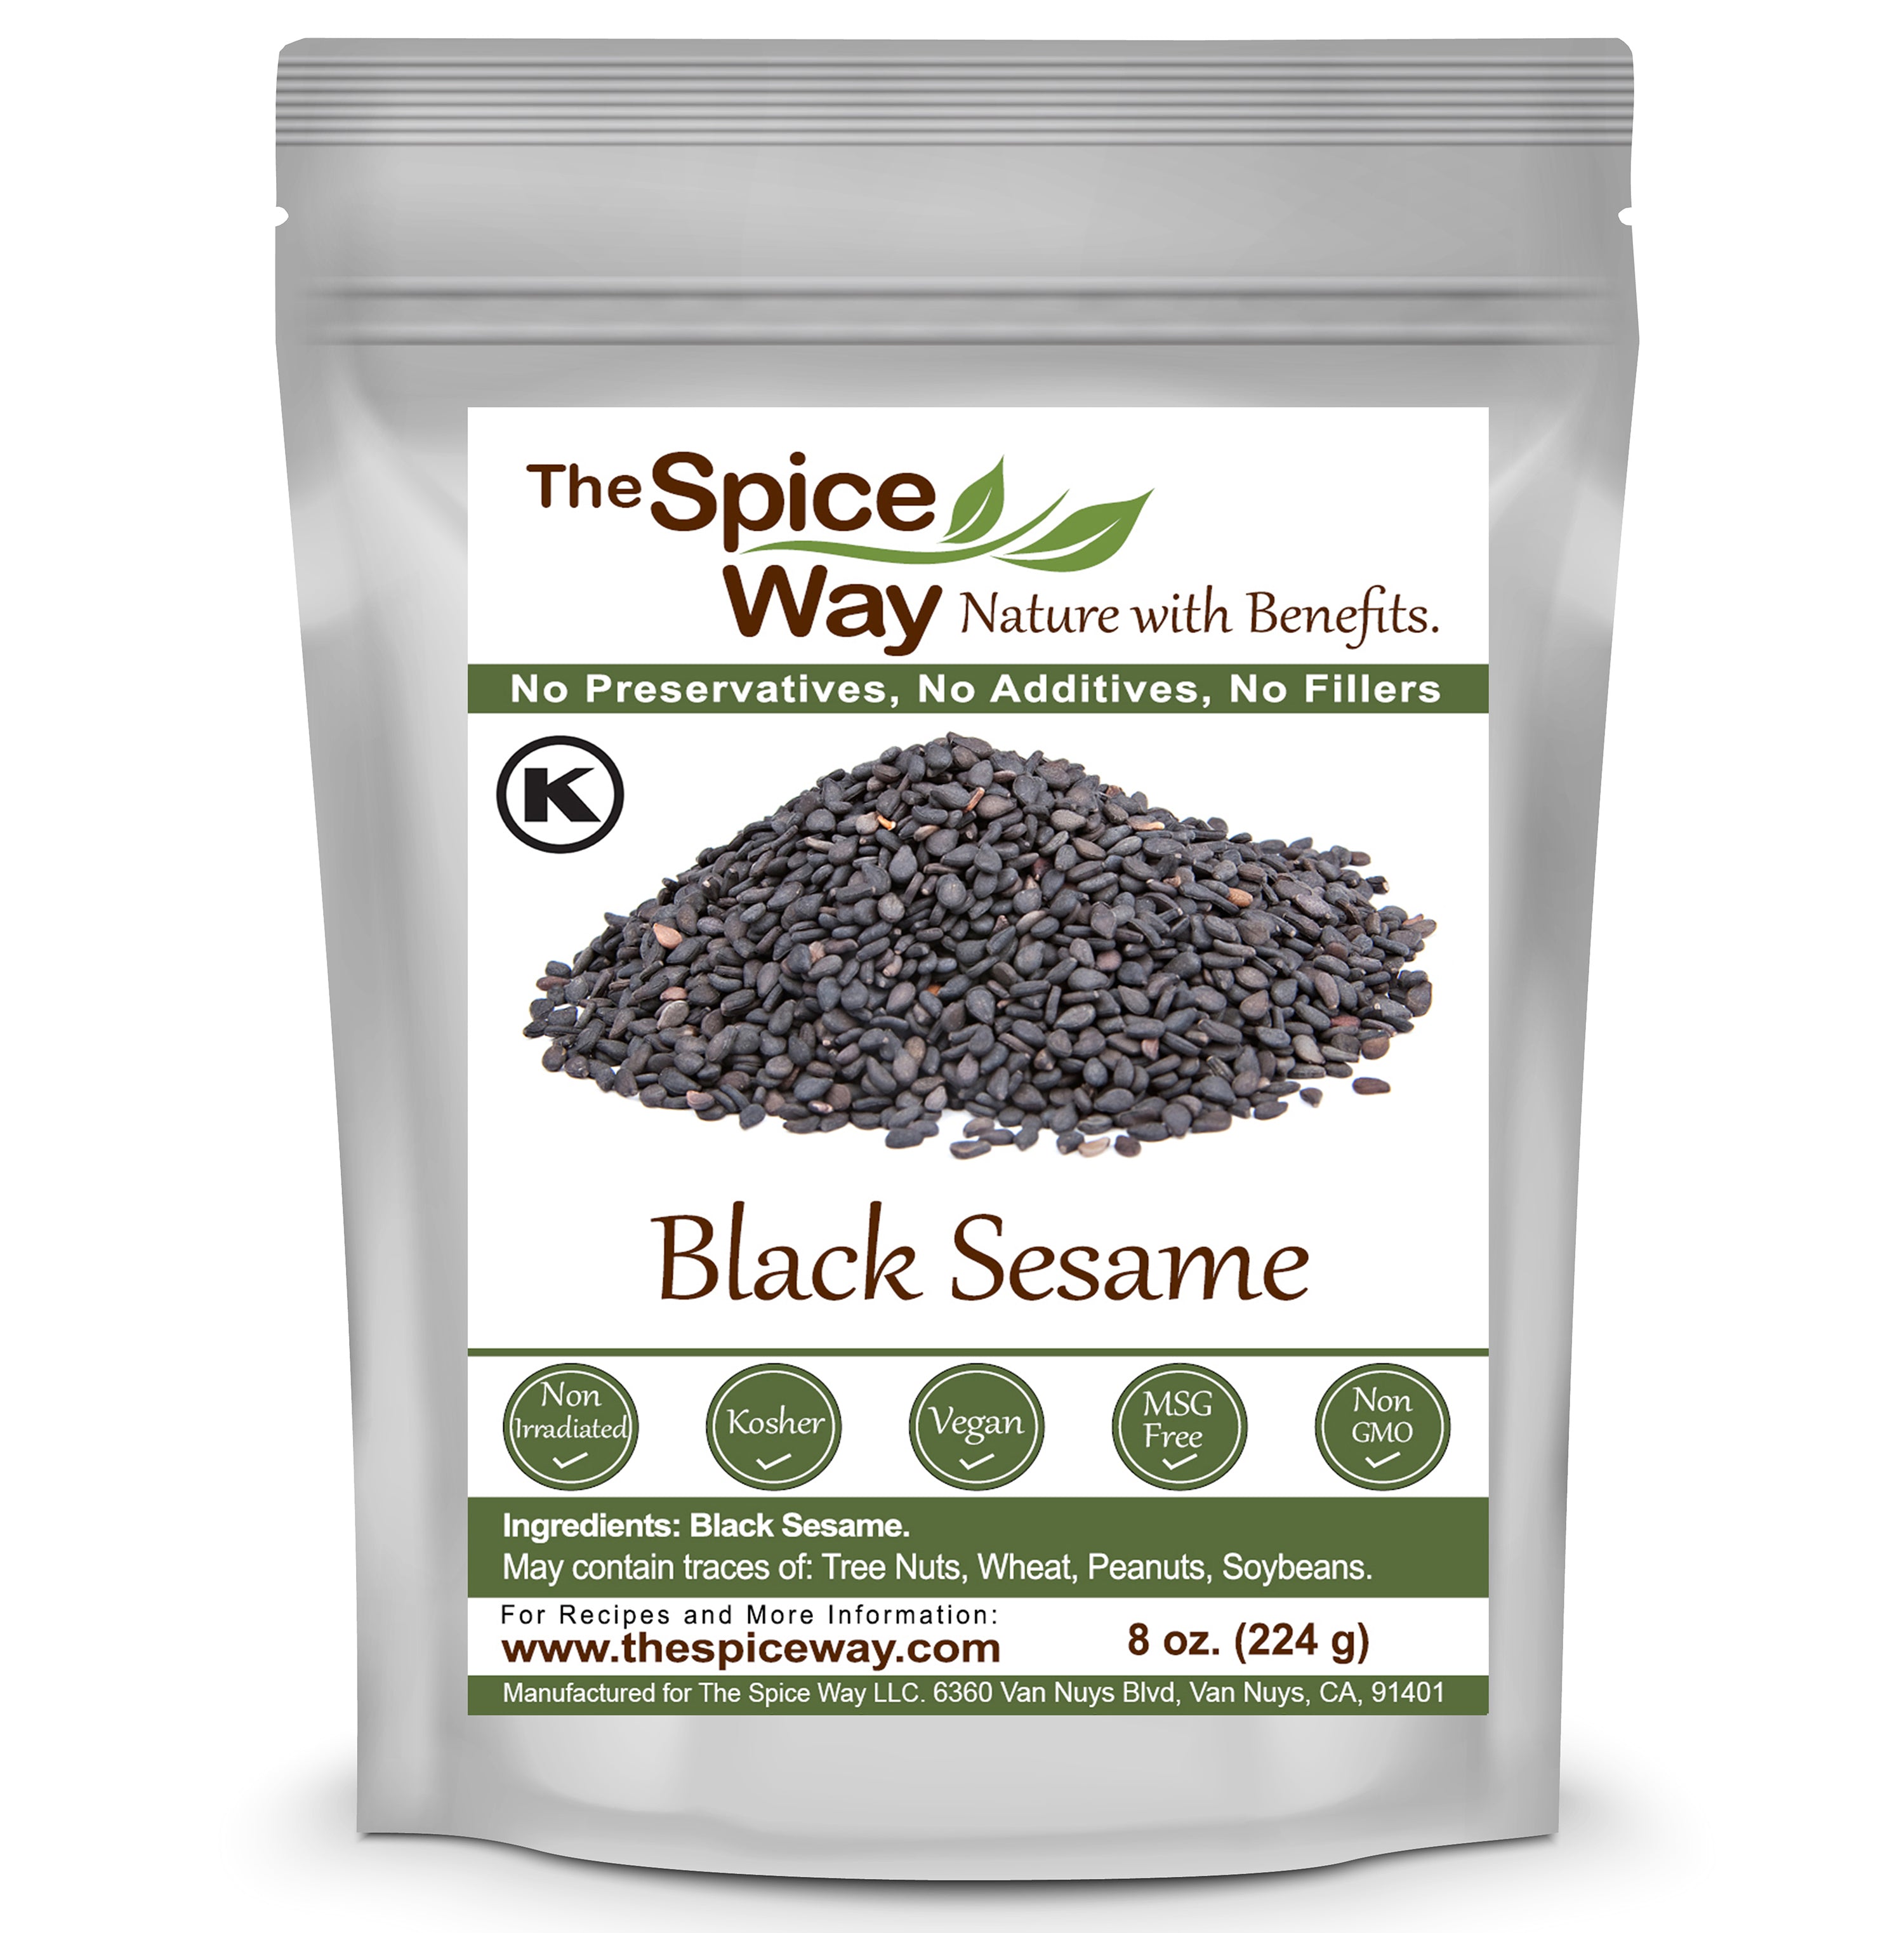 Black Sesame Seeds: Nutrition, Benefits, and More